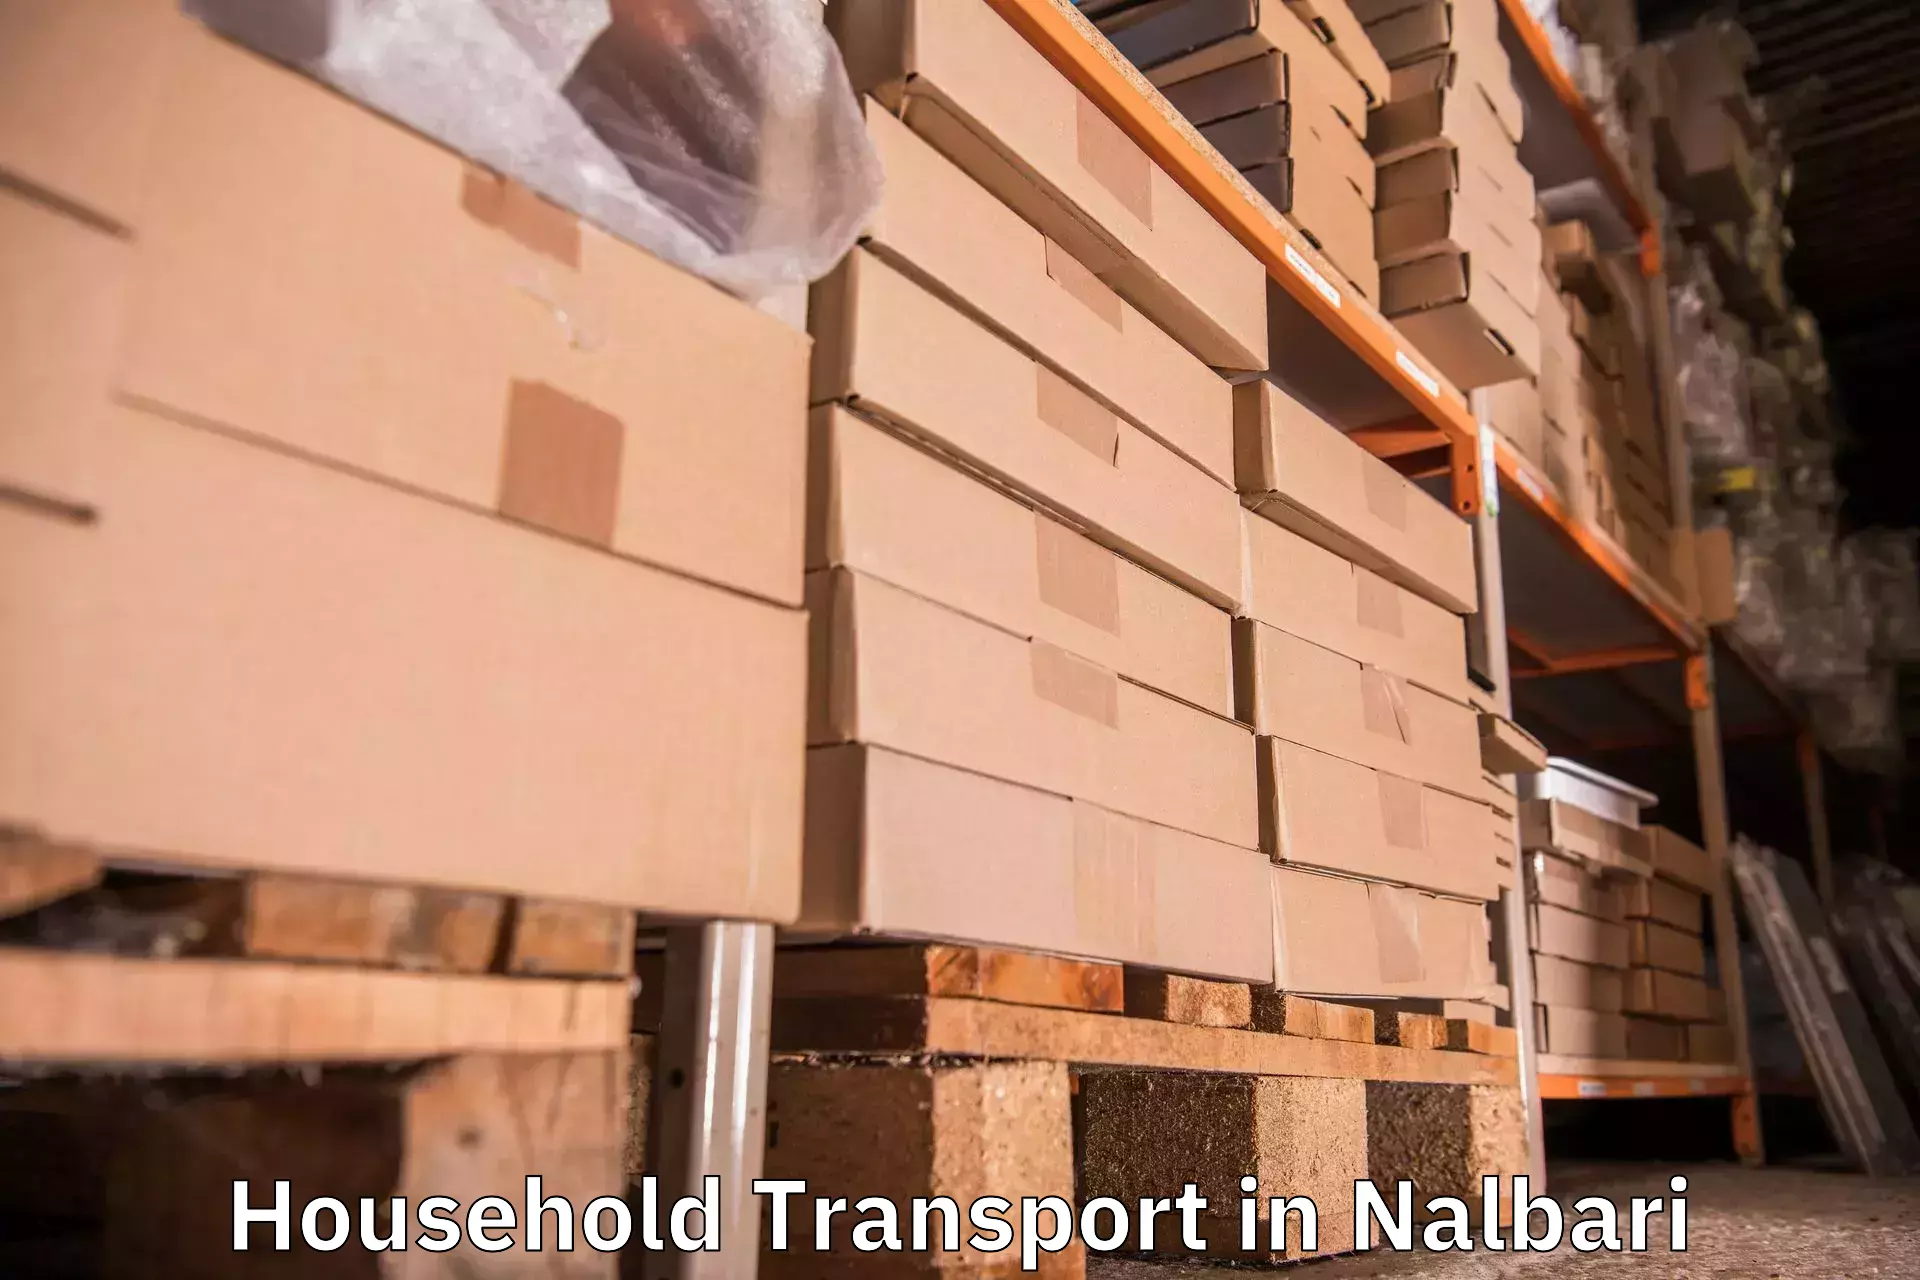 Furniture moving services in Nalbari